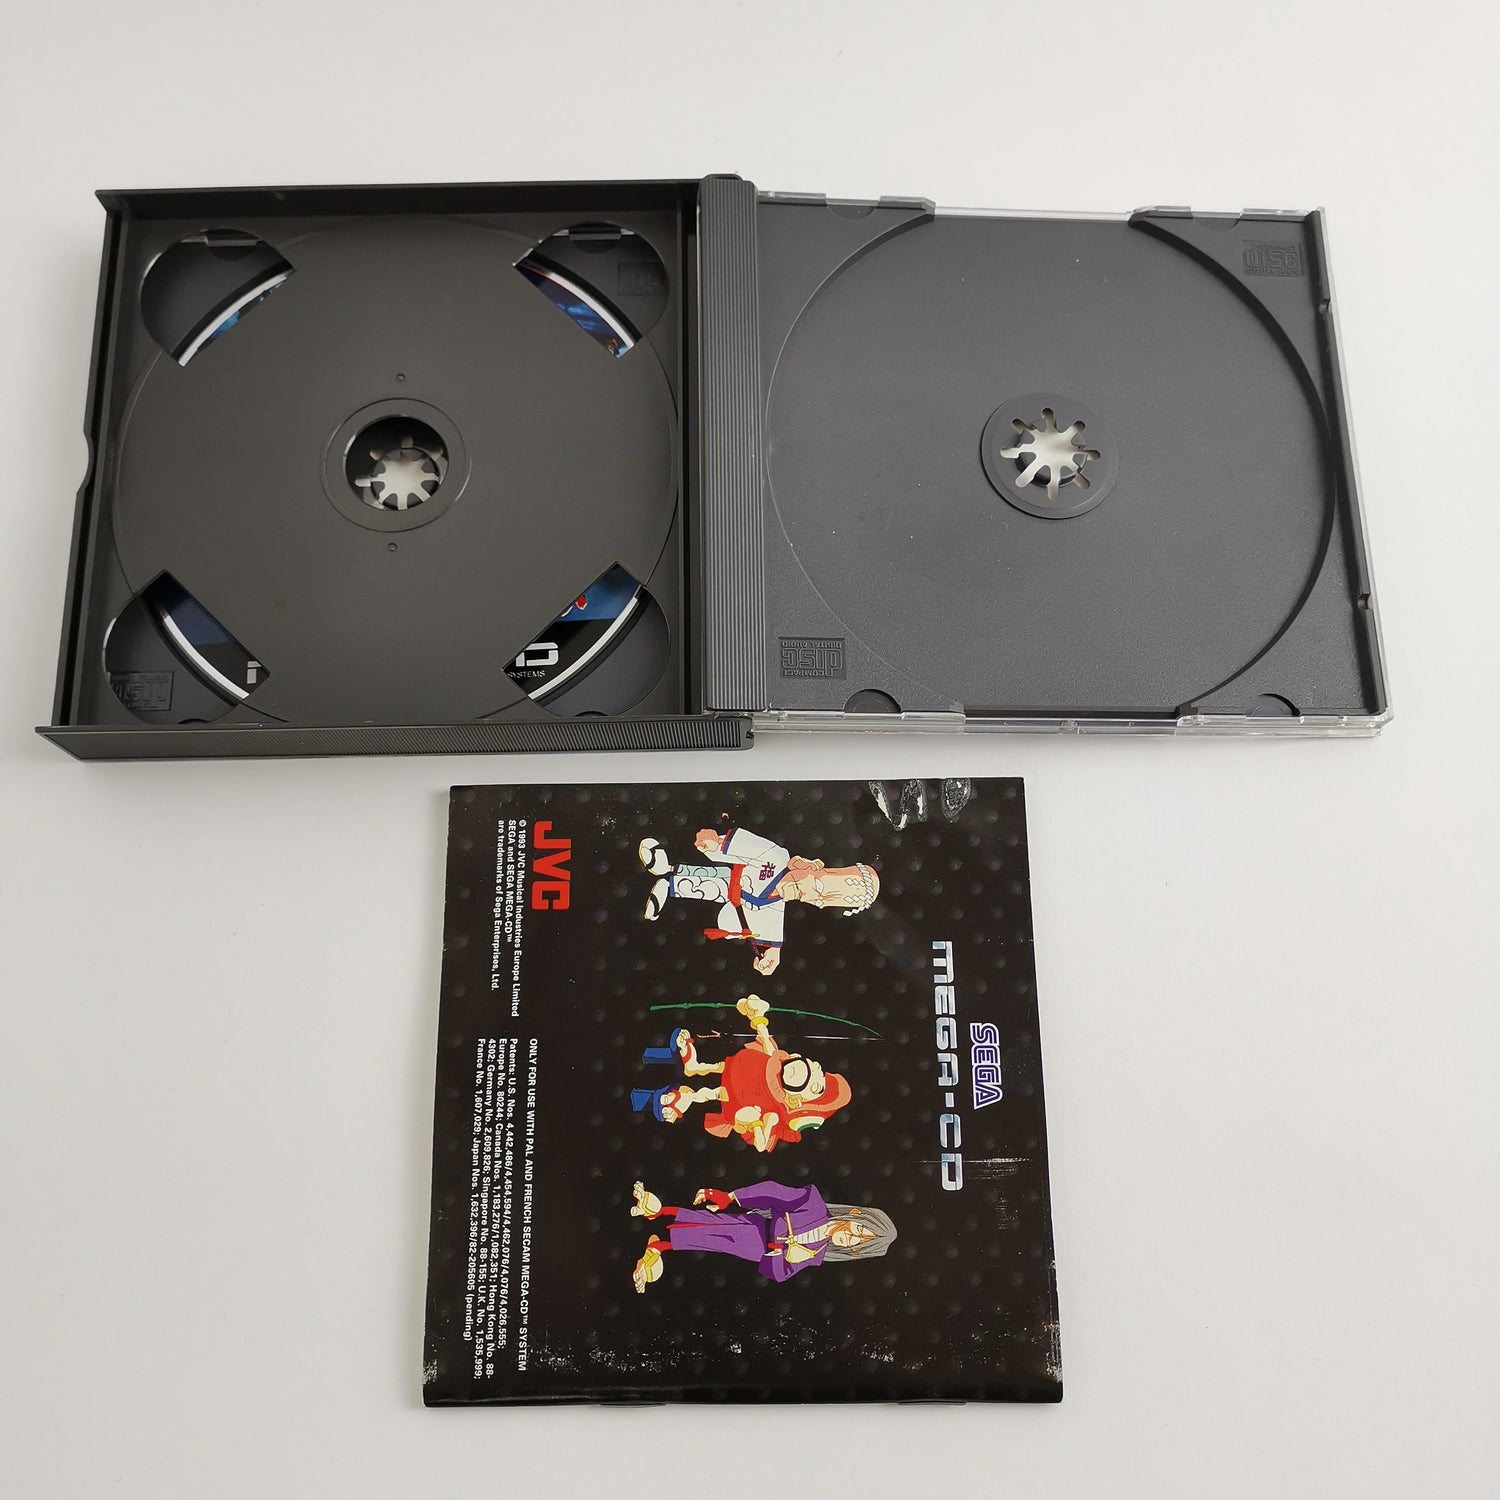 Sega Mega CD game: Keio Flying Squadron - original packaging & instructions PAL | MC disc system